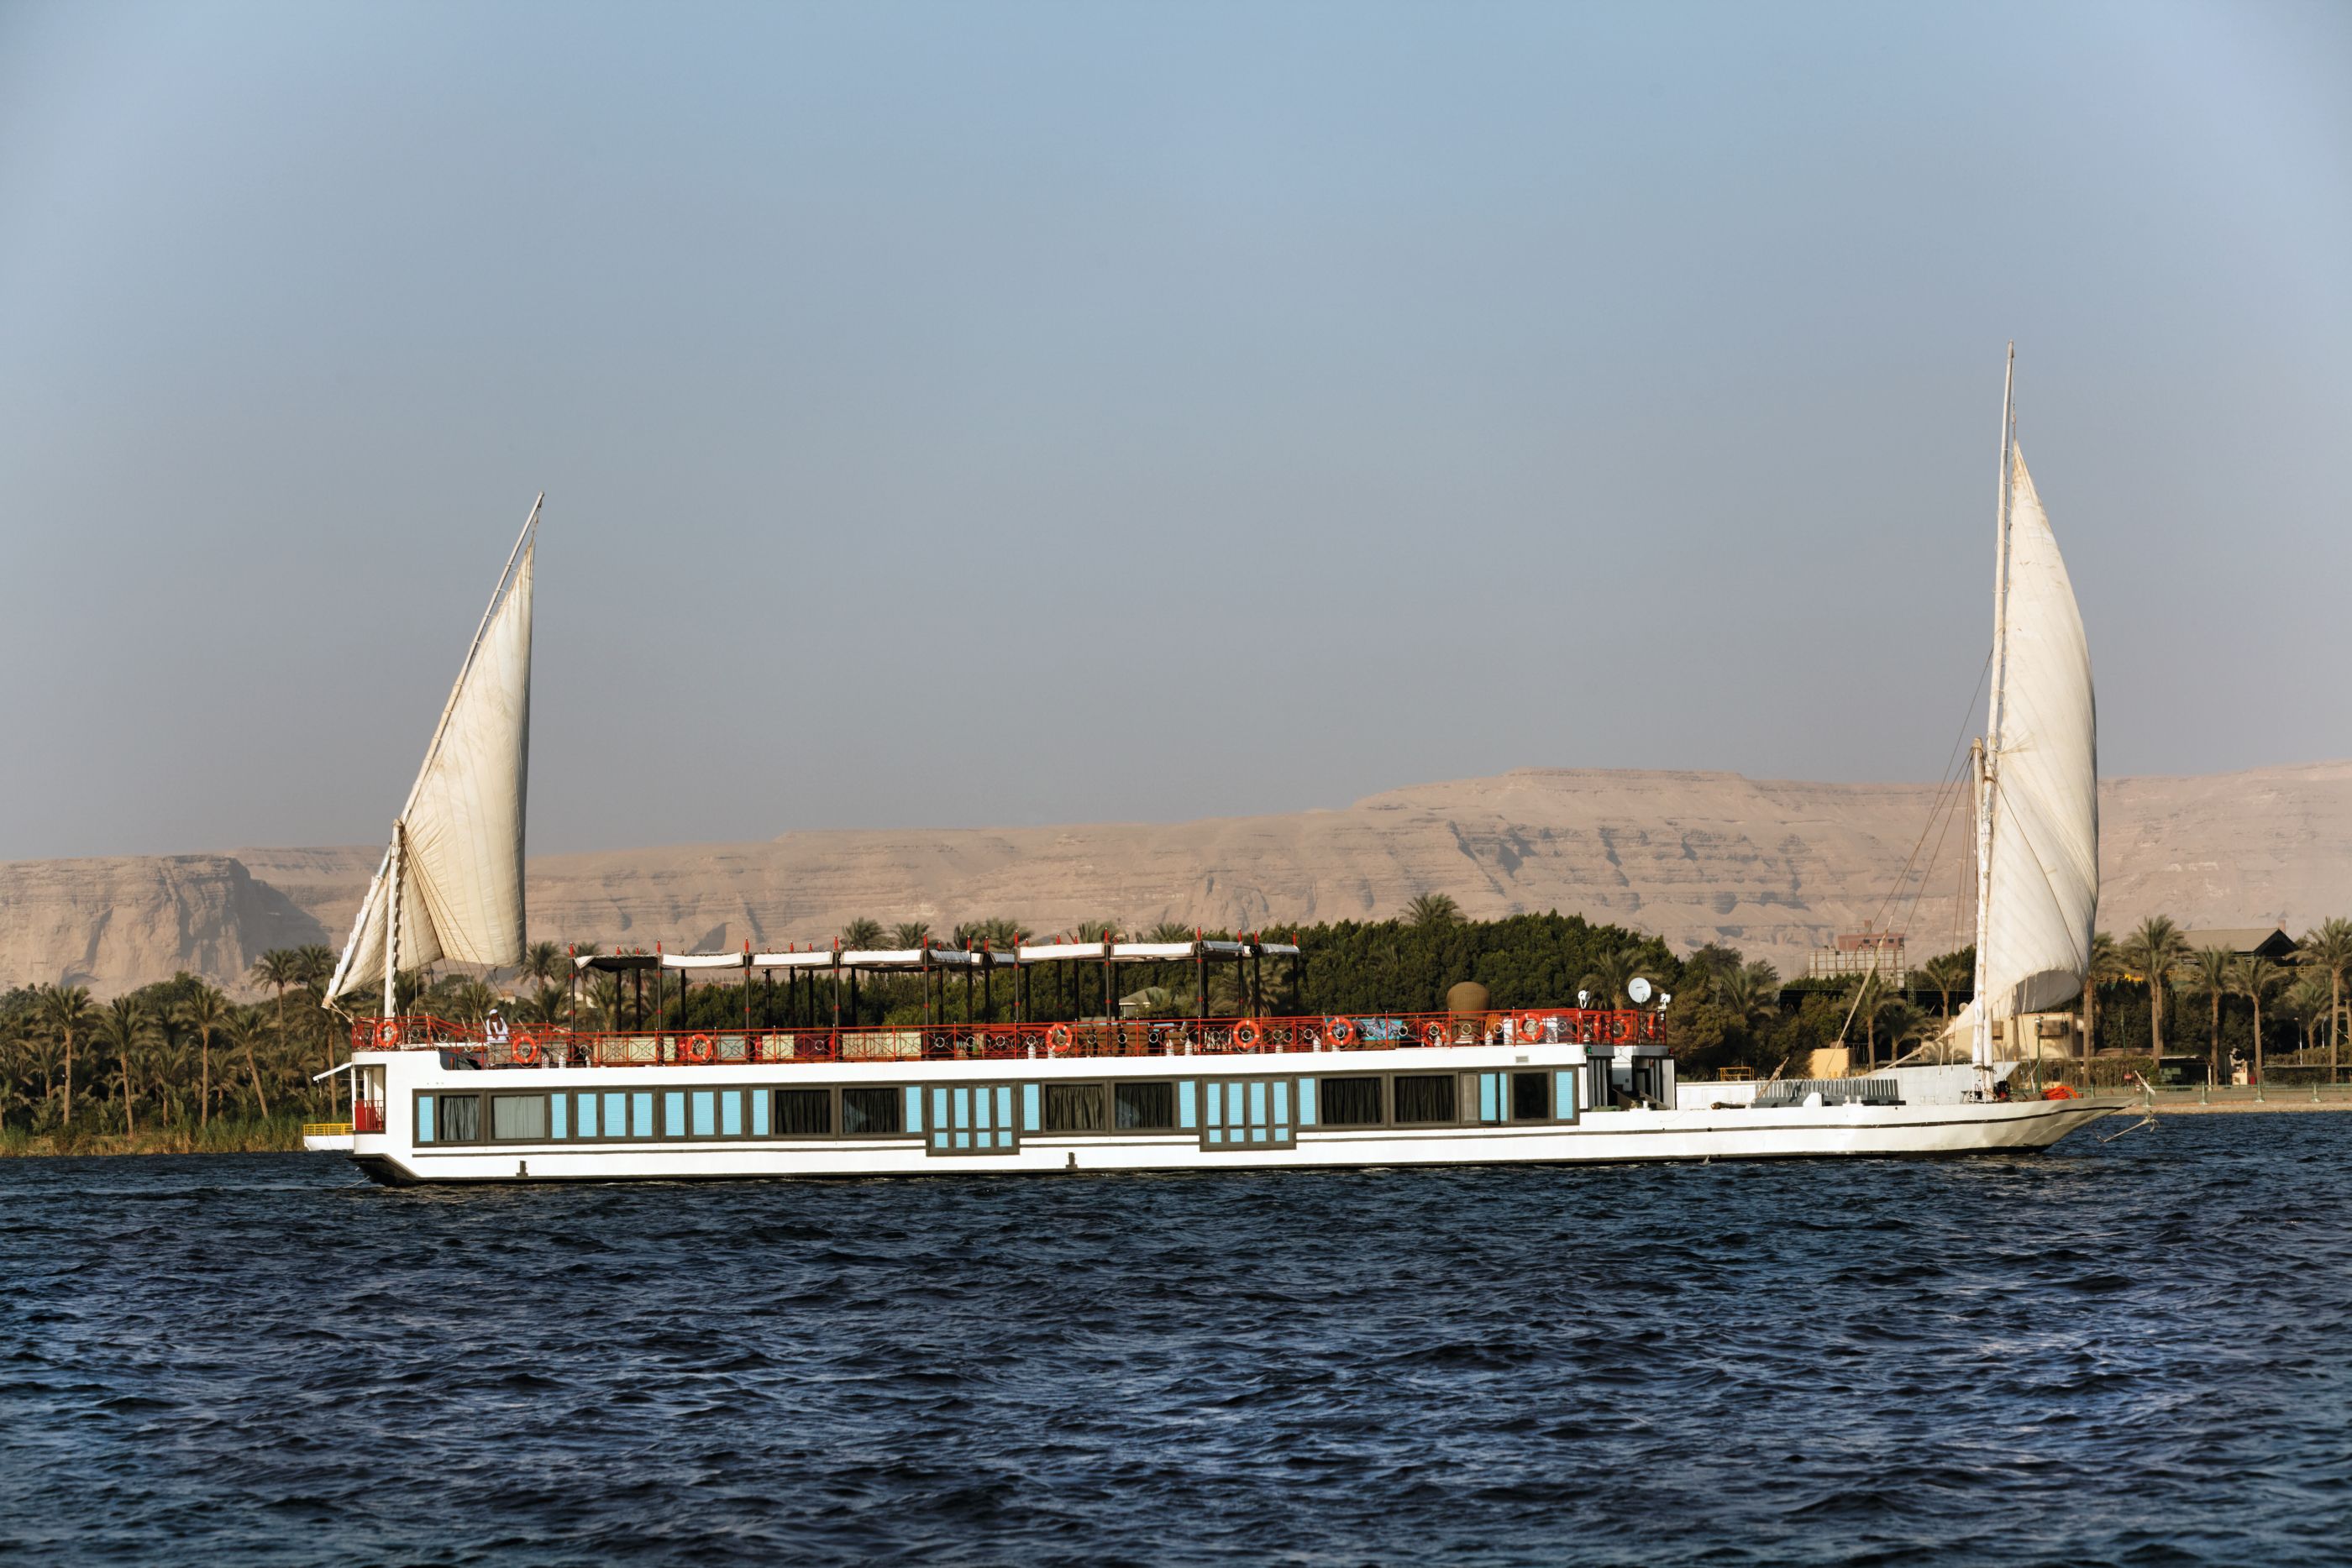 The Movenpick SB Freddya sailing in Egypt